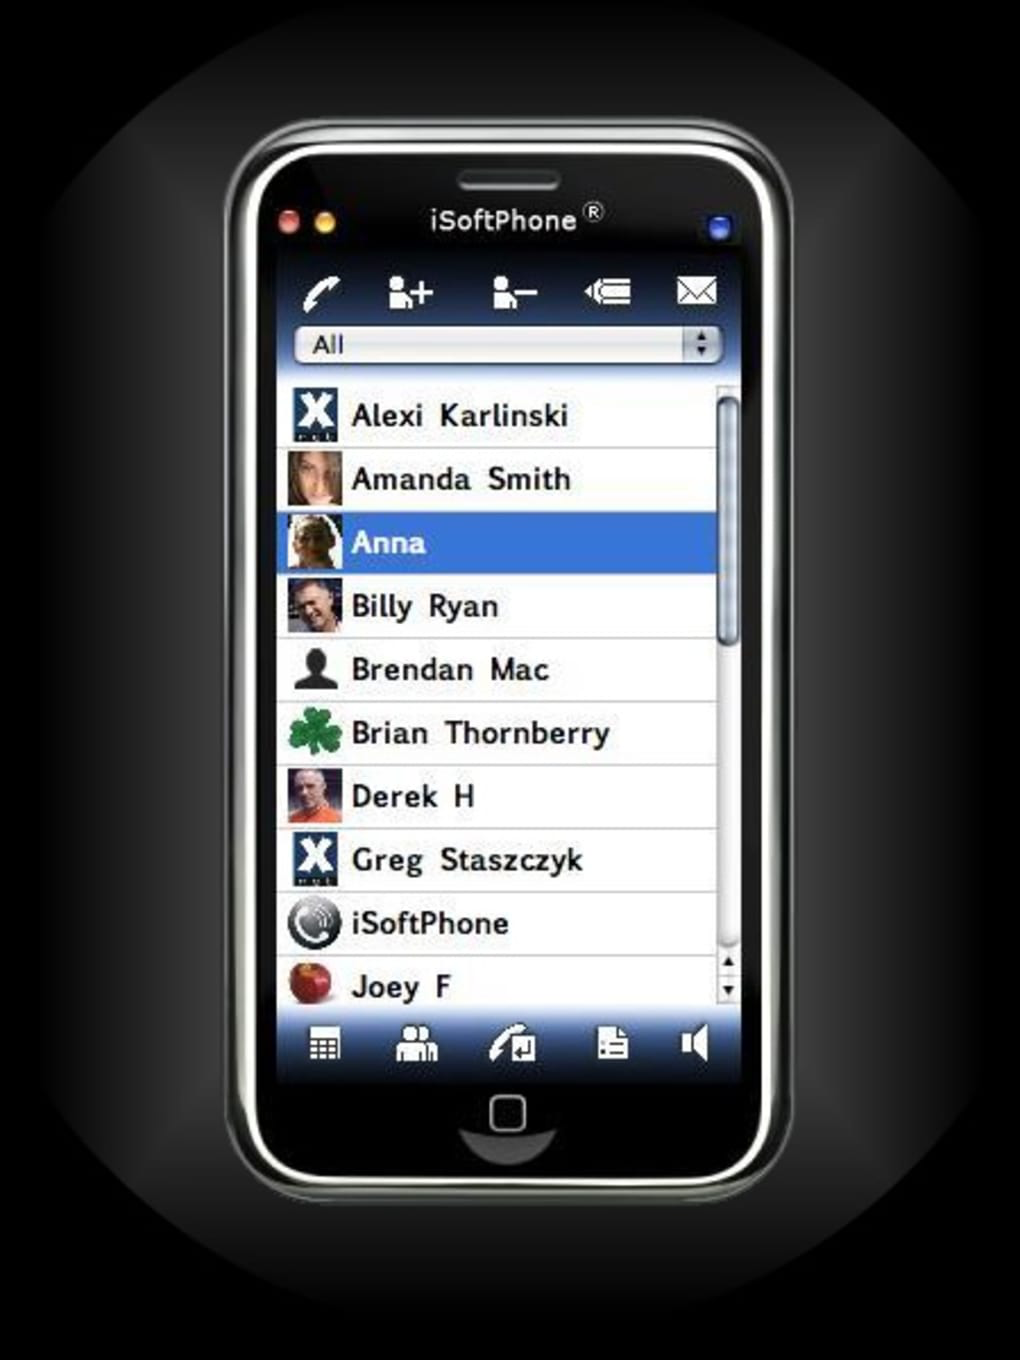 iSoftPhone Software - iSoftPhone contact list